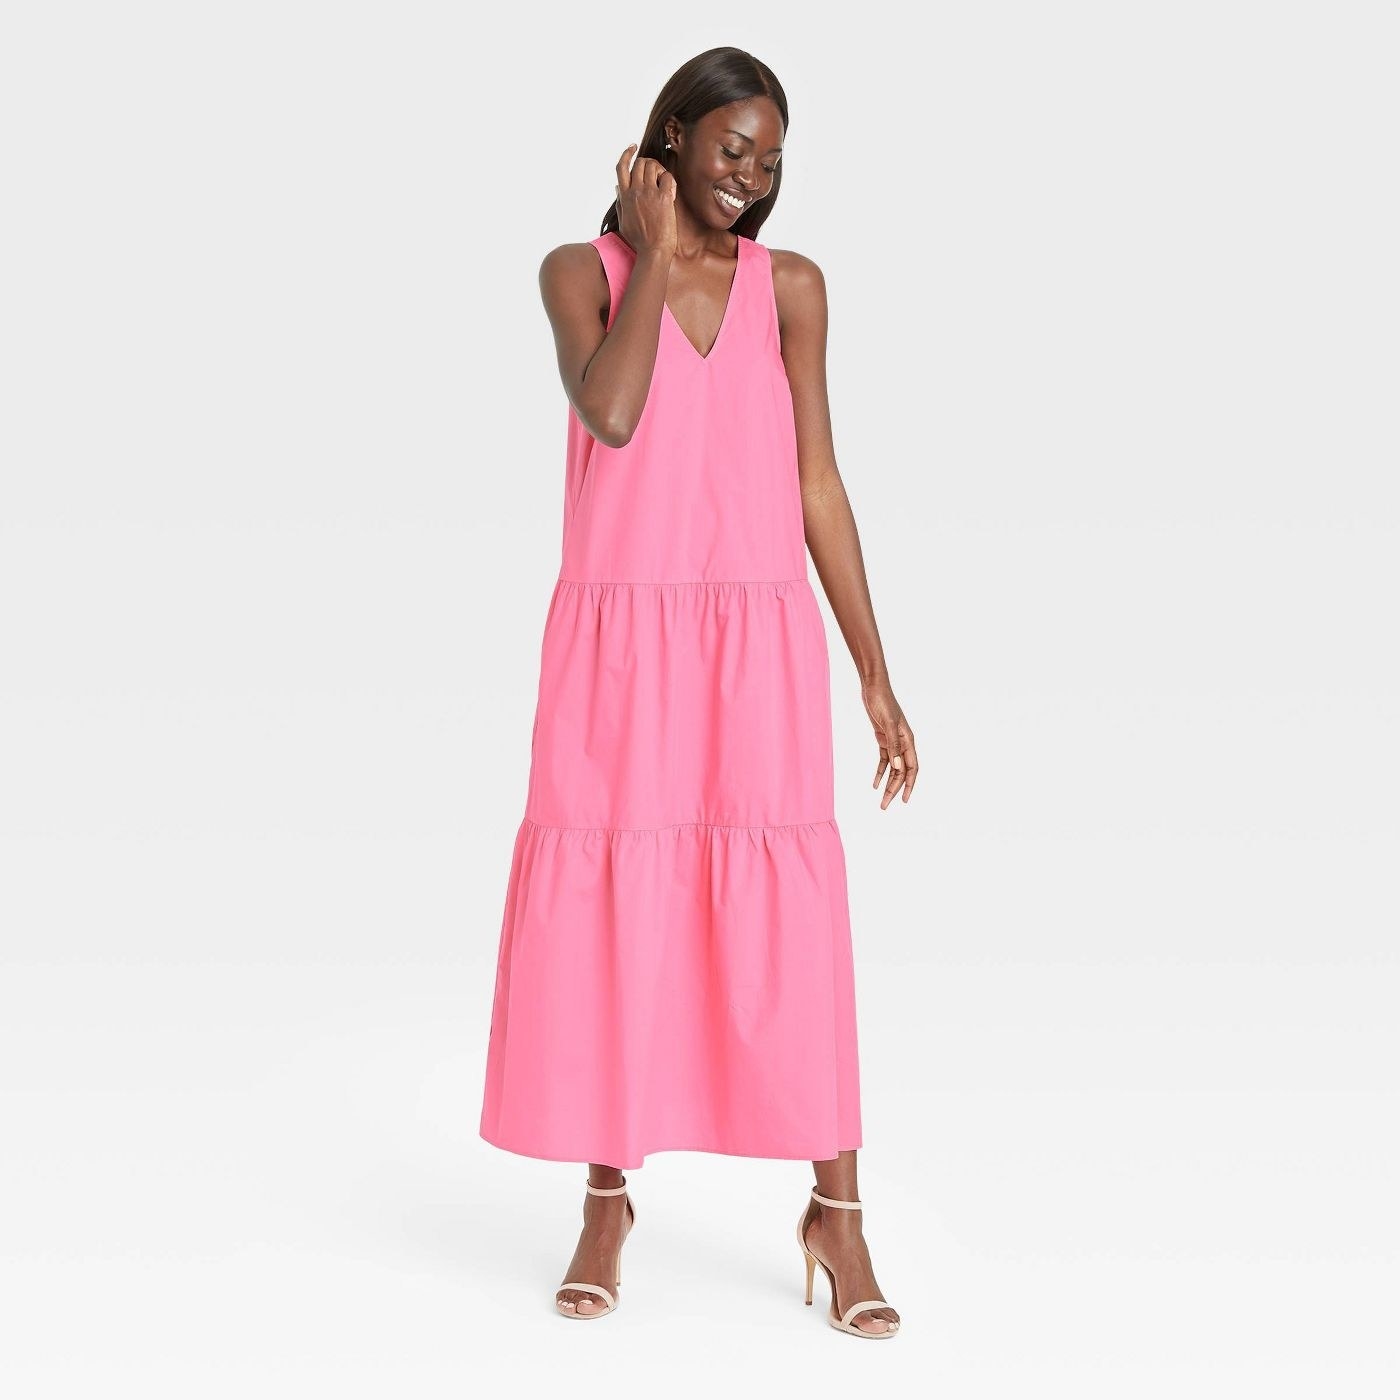 A model wearing a pink sleeveless tiered maxi dress